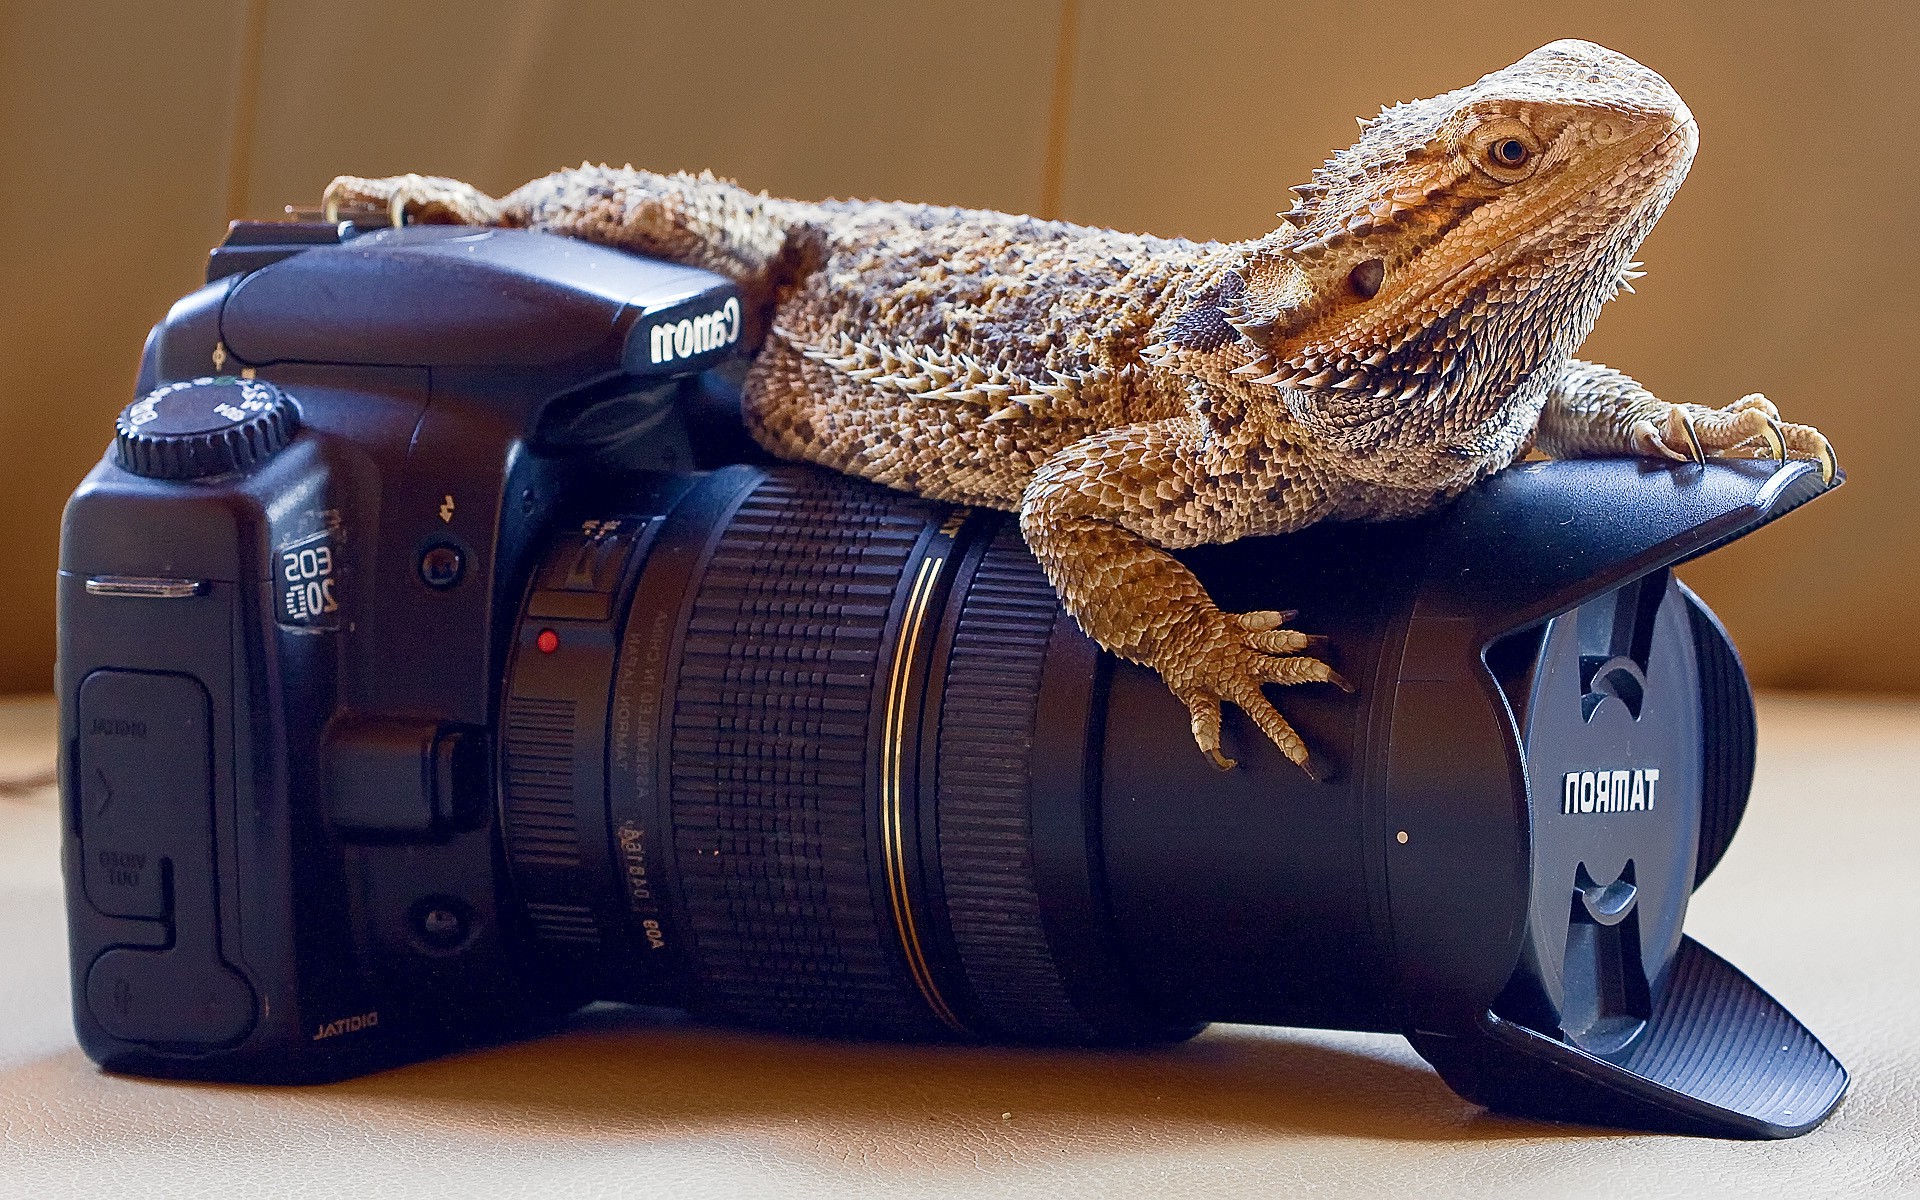 animals, Reptile, Lizards, Skin, Camera, Canon, Closeup, Photography, Reflex Wallpaper